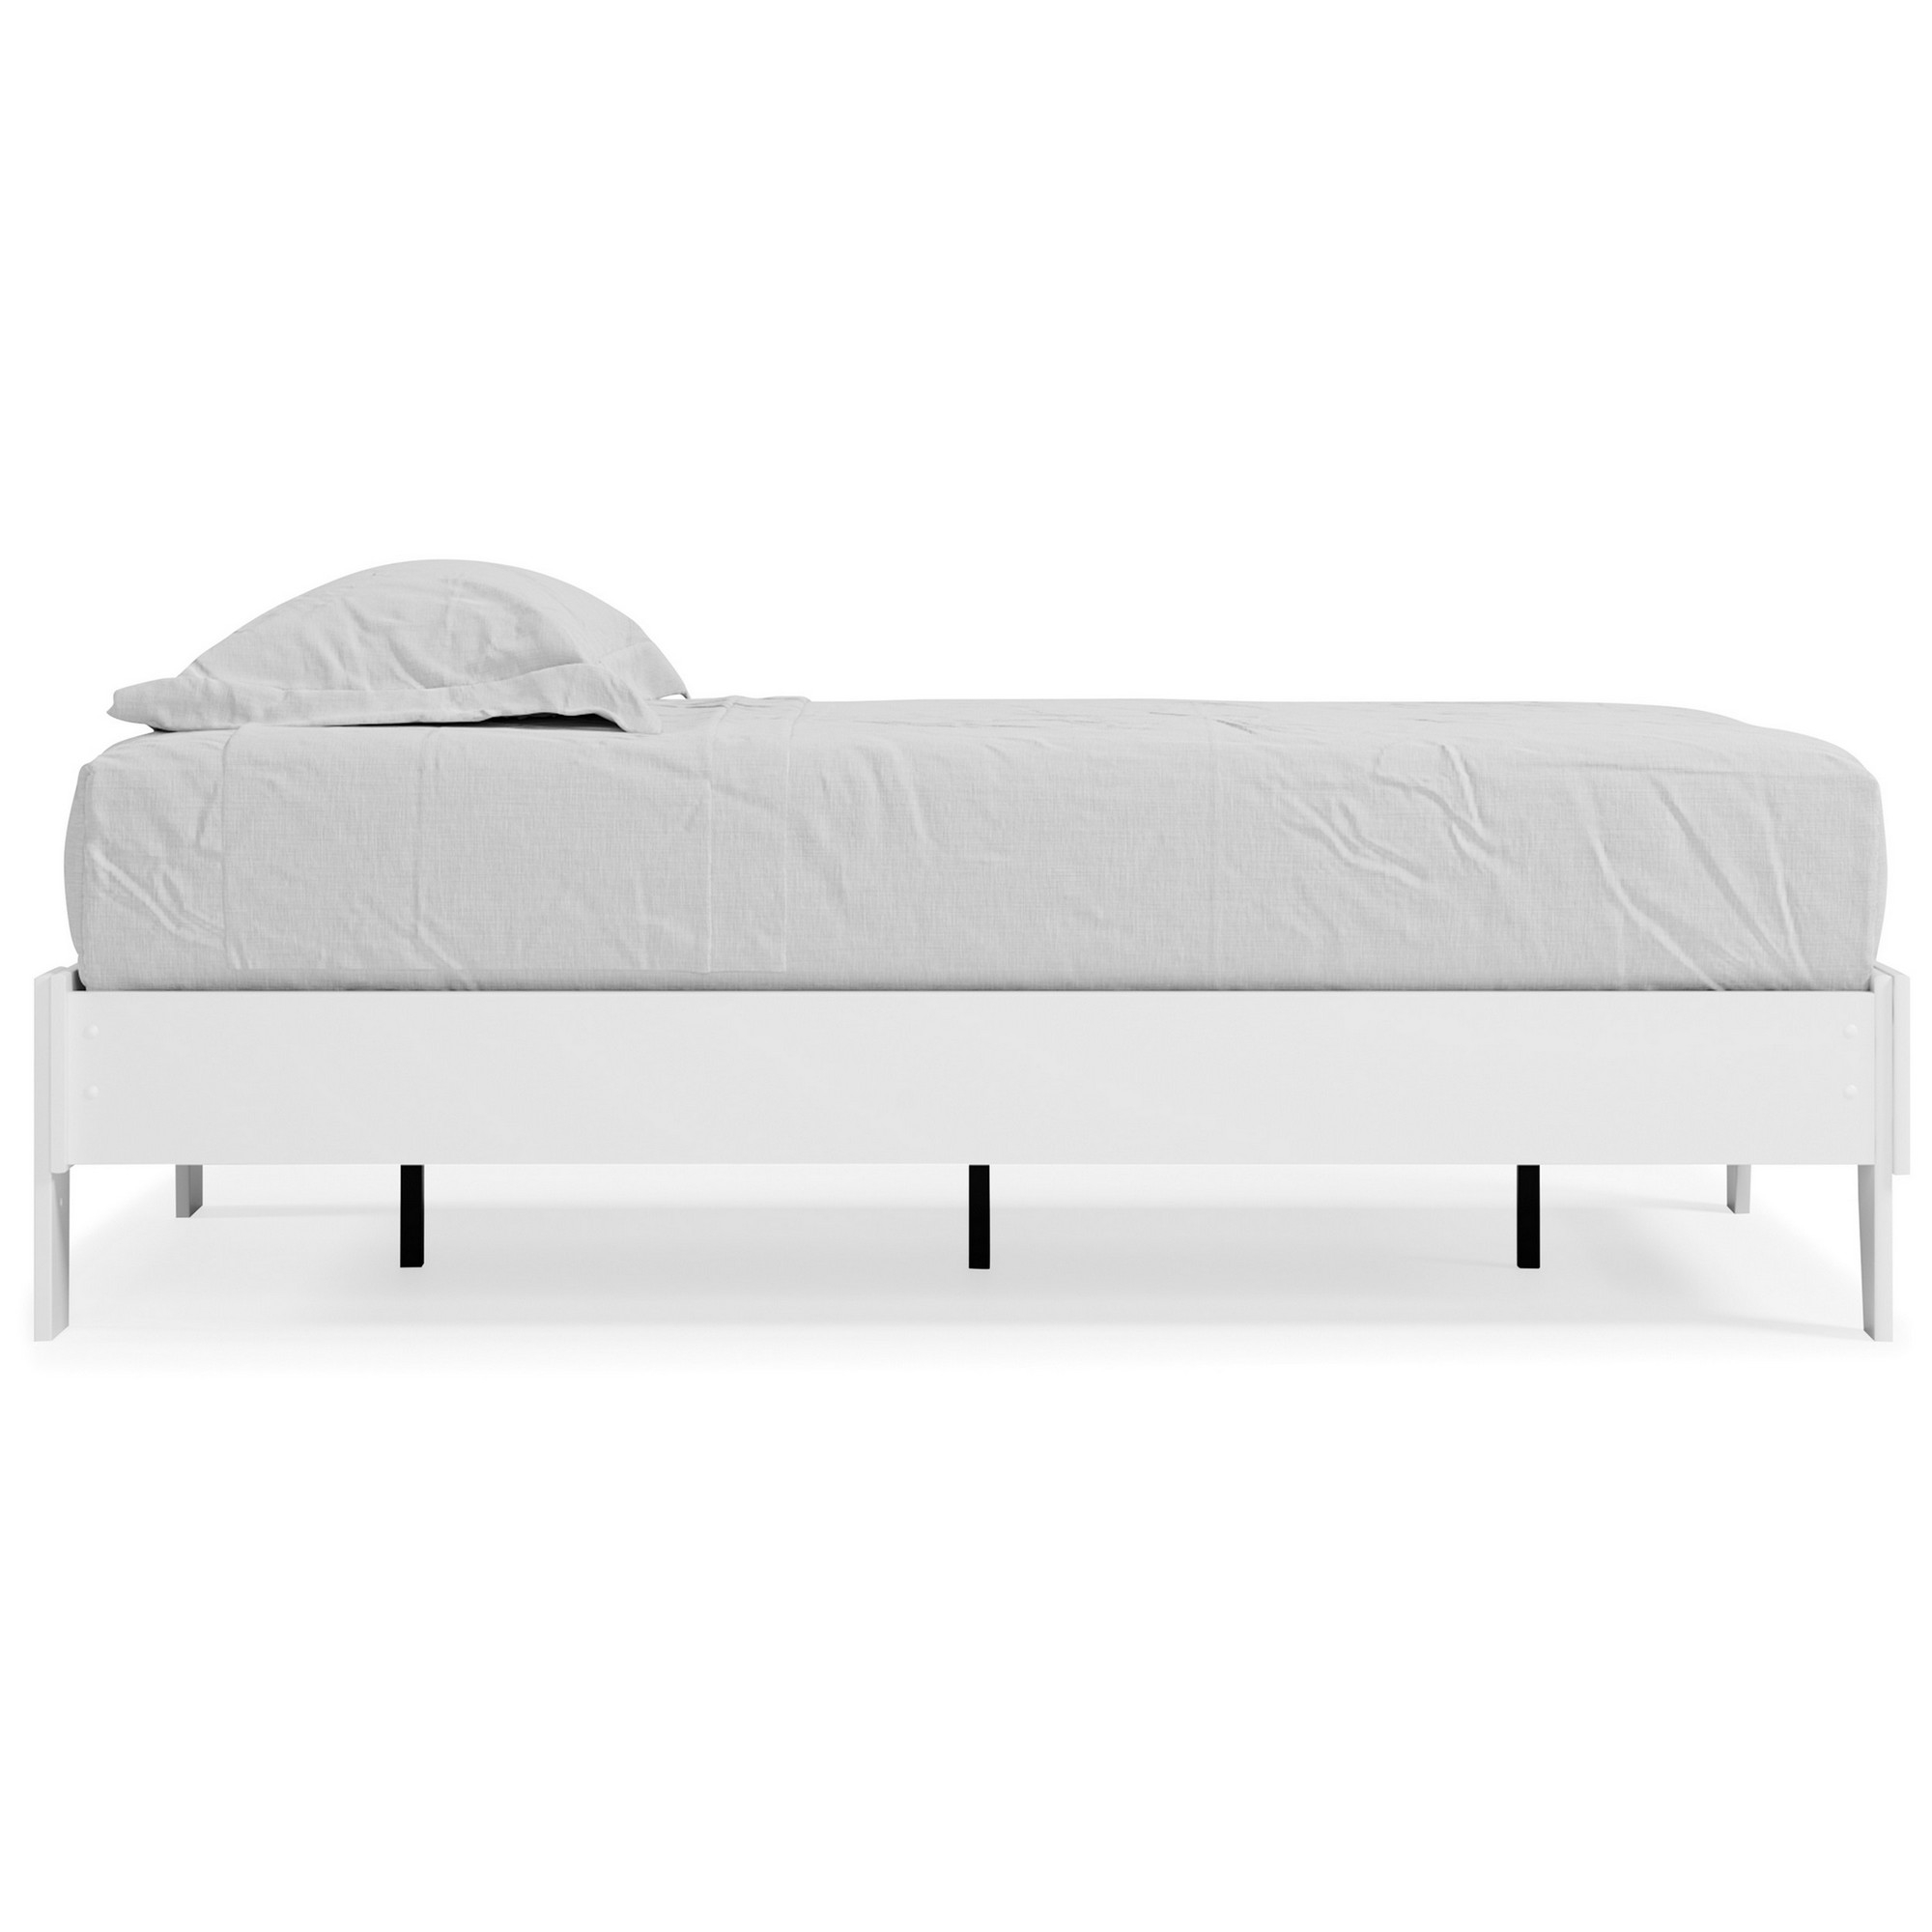 Asher Modern Twin Size Platform Bed, Minimalistic Crisp White Wood Base- Saltoro Sherpi